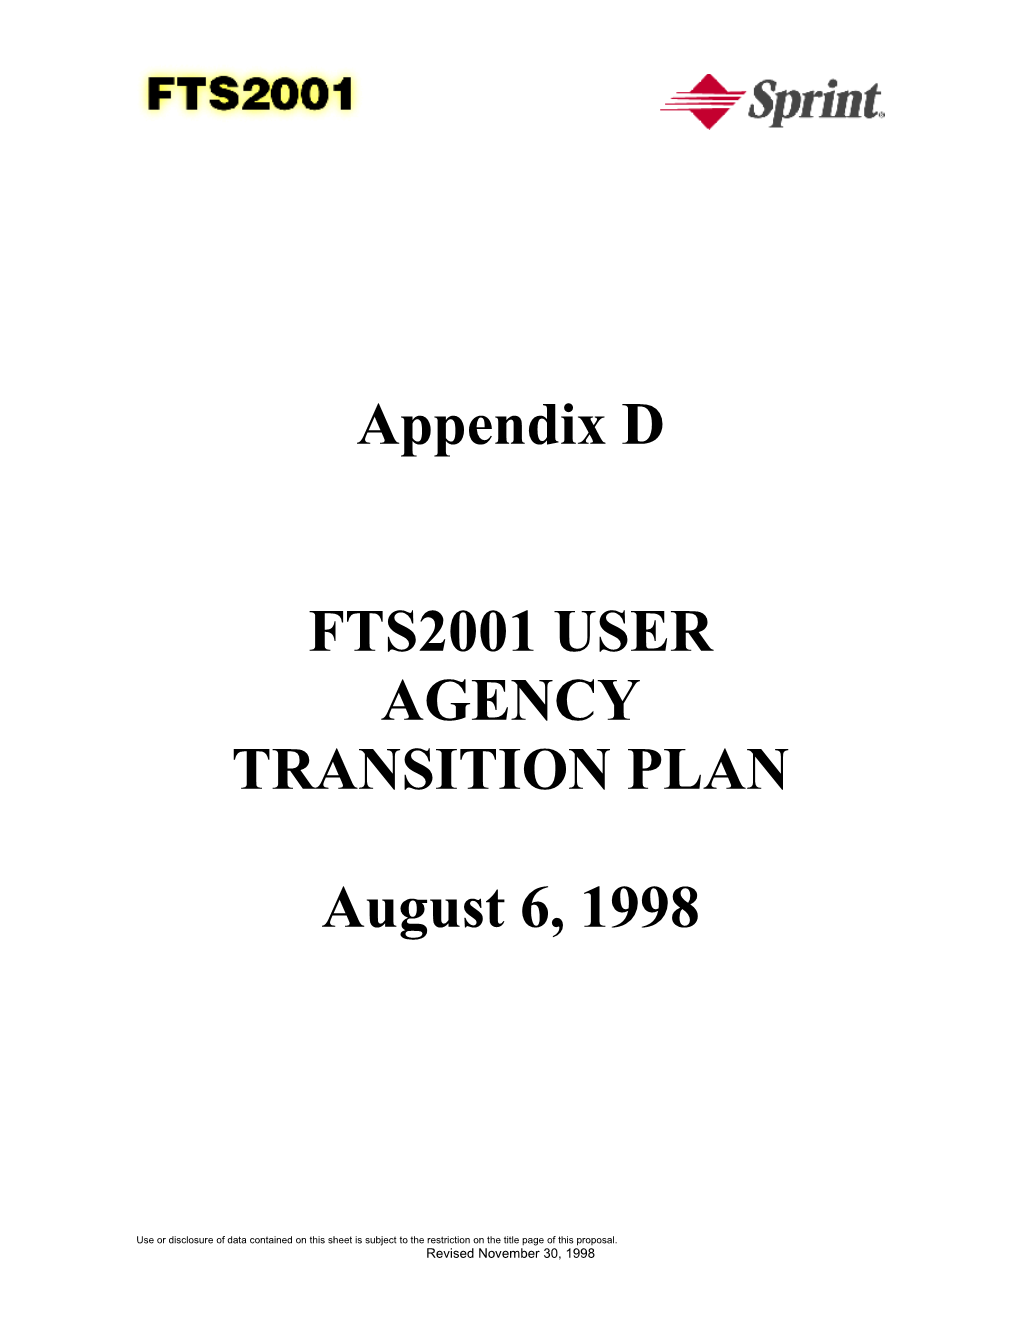 Transition Plan s1